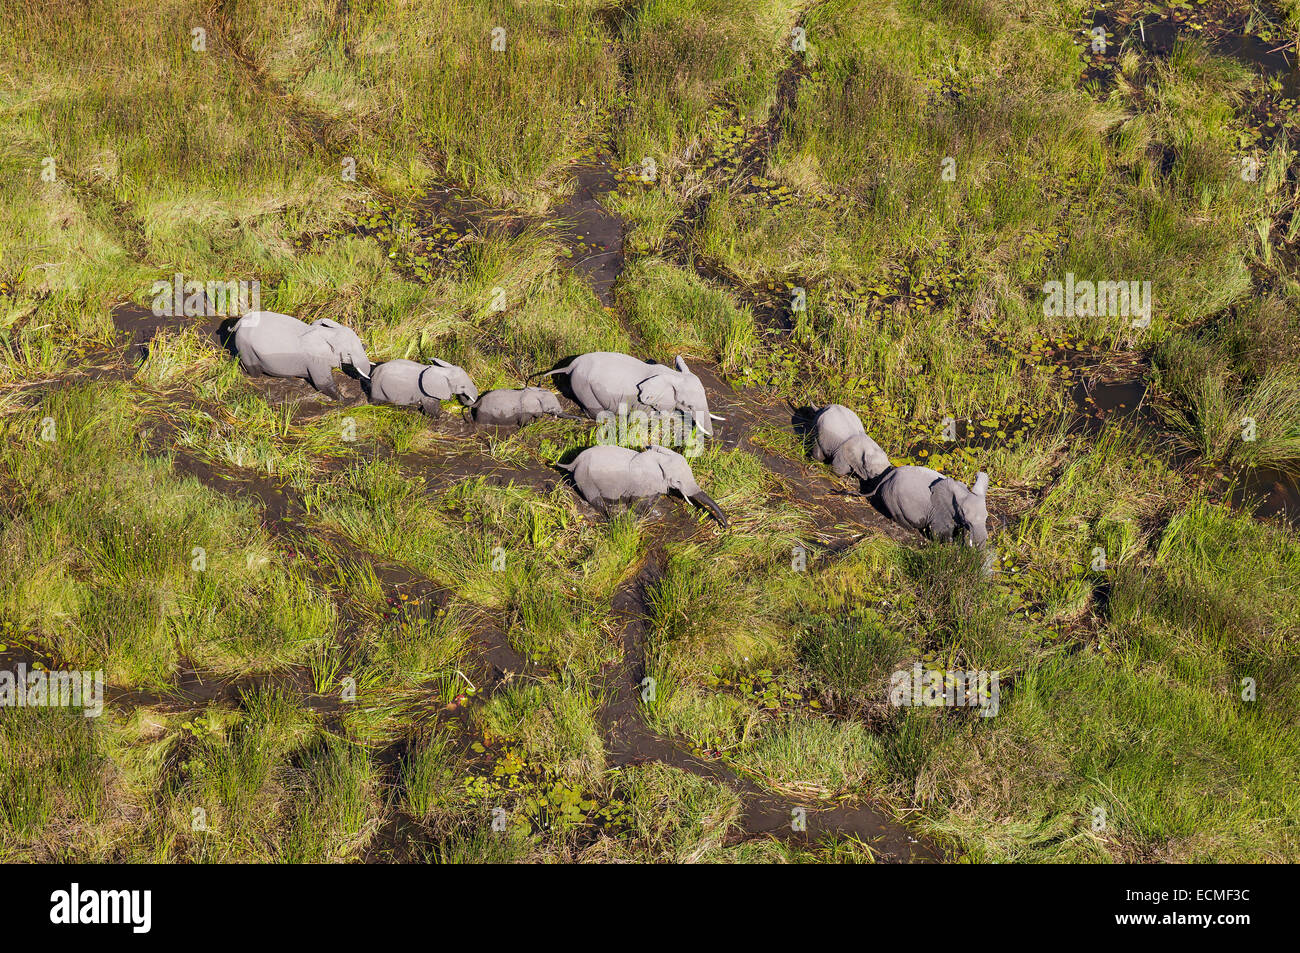 Afrikanische Elefanten (Loxodonta Africana), Zucht-Herde, roaming in einem Süßwasser-Sumpf, Luftaufnahme, Okavango Delta, Botswana Stockfoto